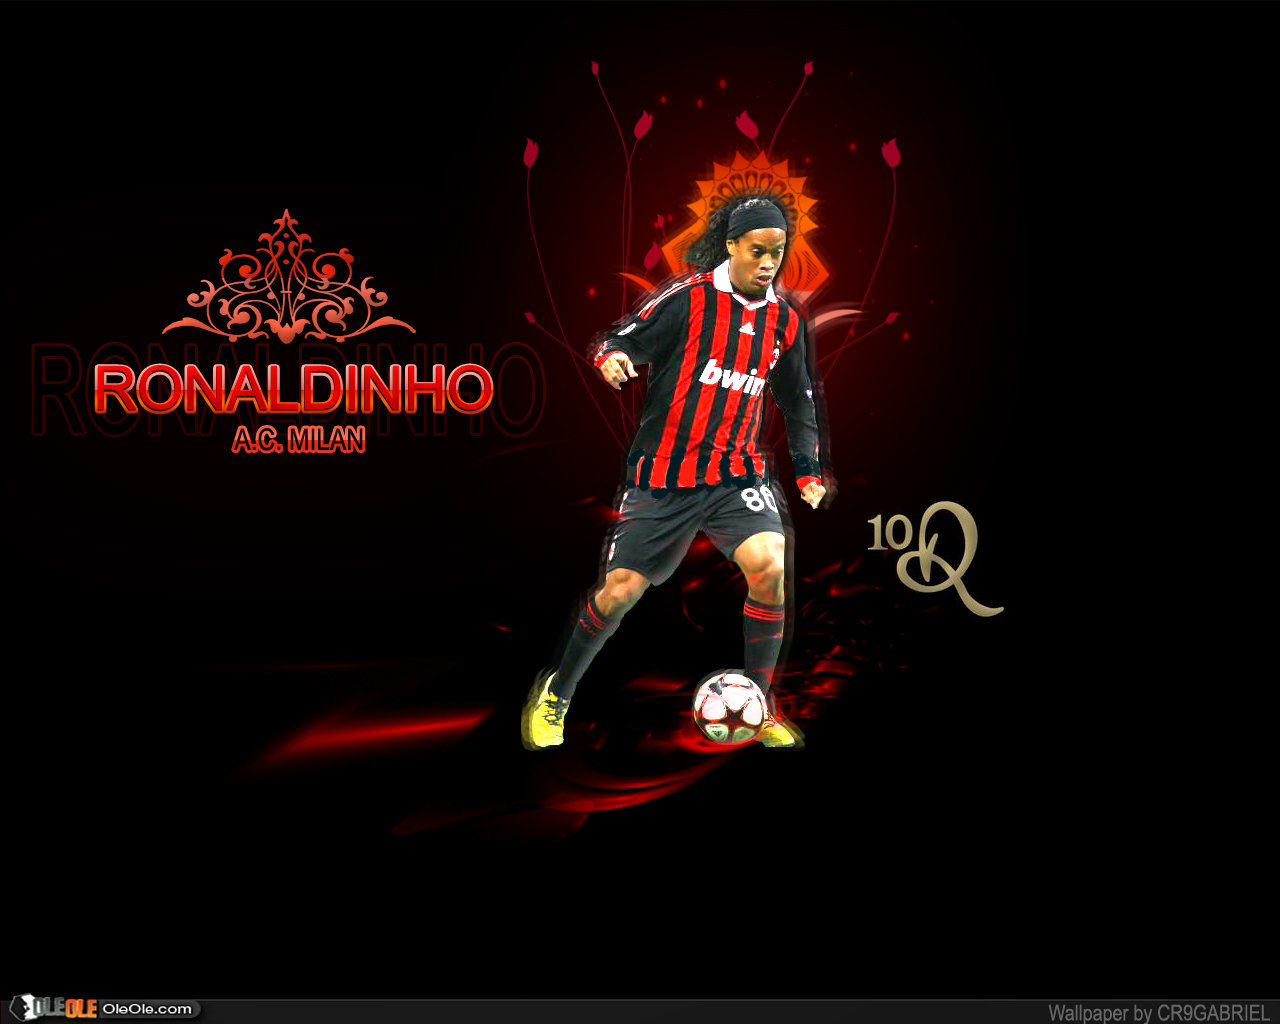 Soccer blog: Ac milan Ronaldinho Wallpaper